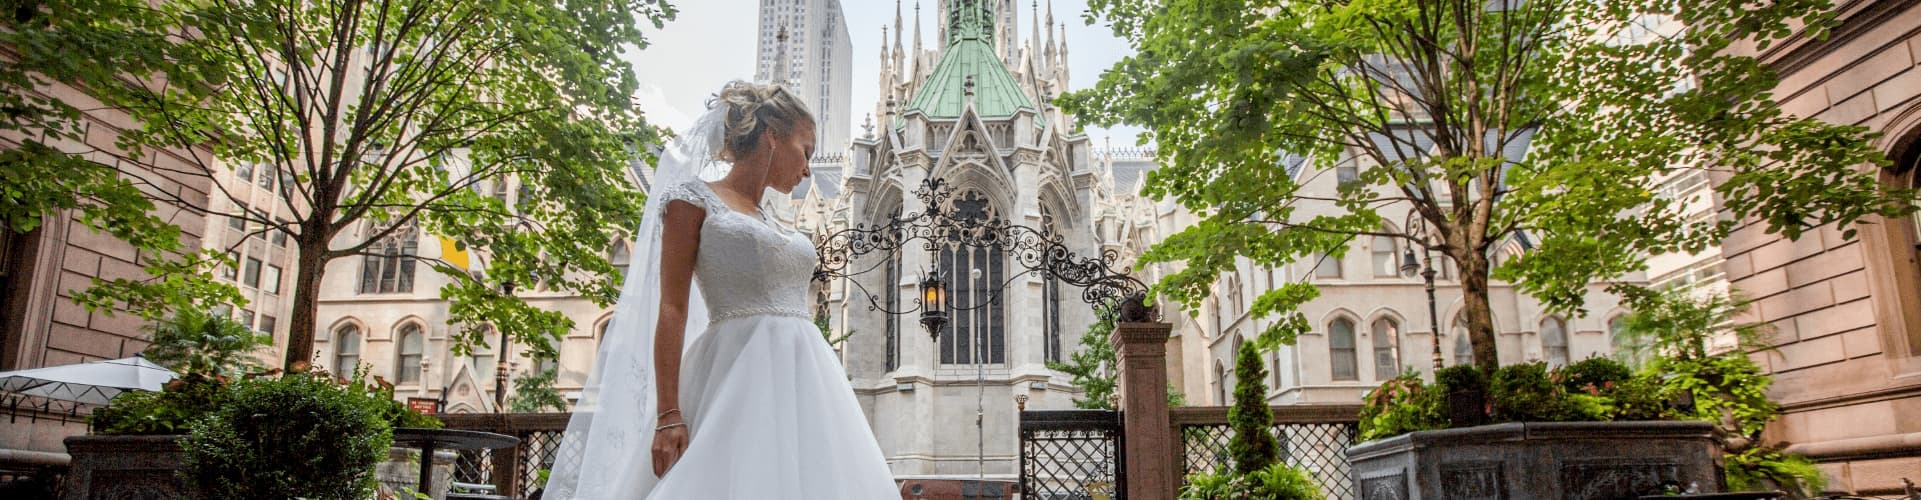 New York City's Top 25 Wedding Planners